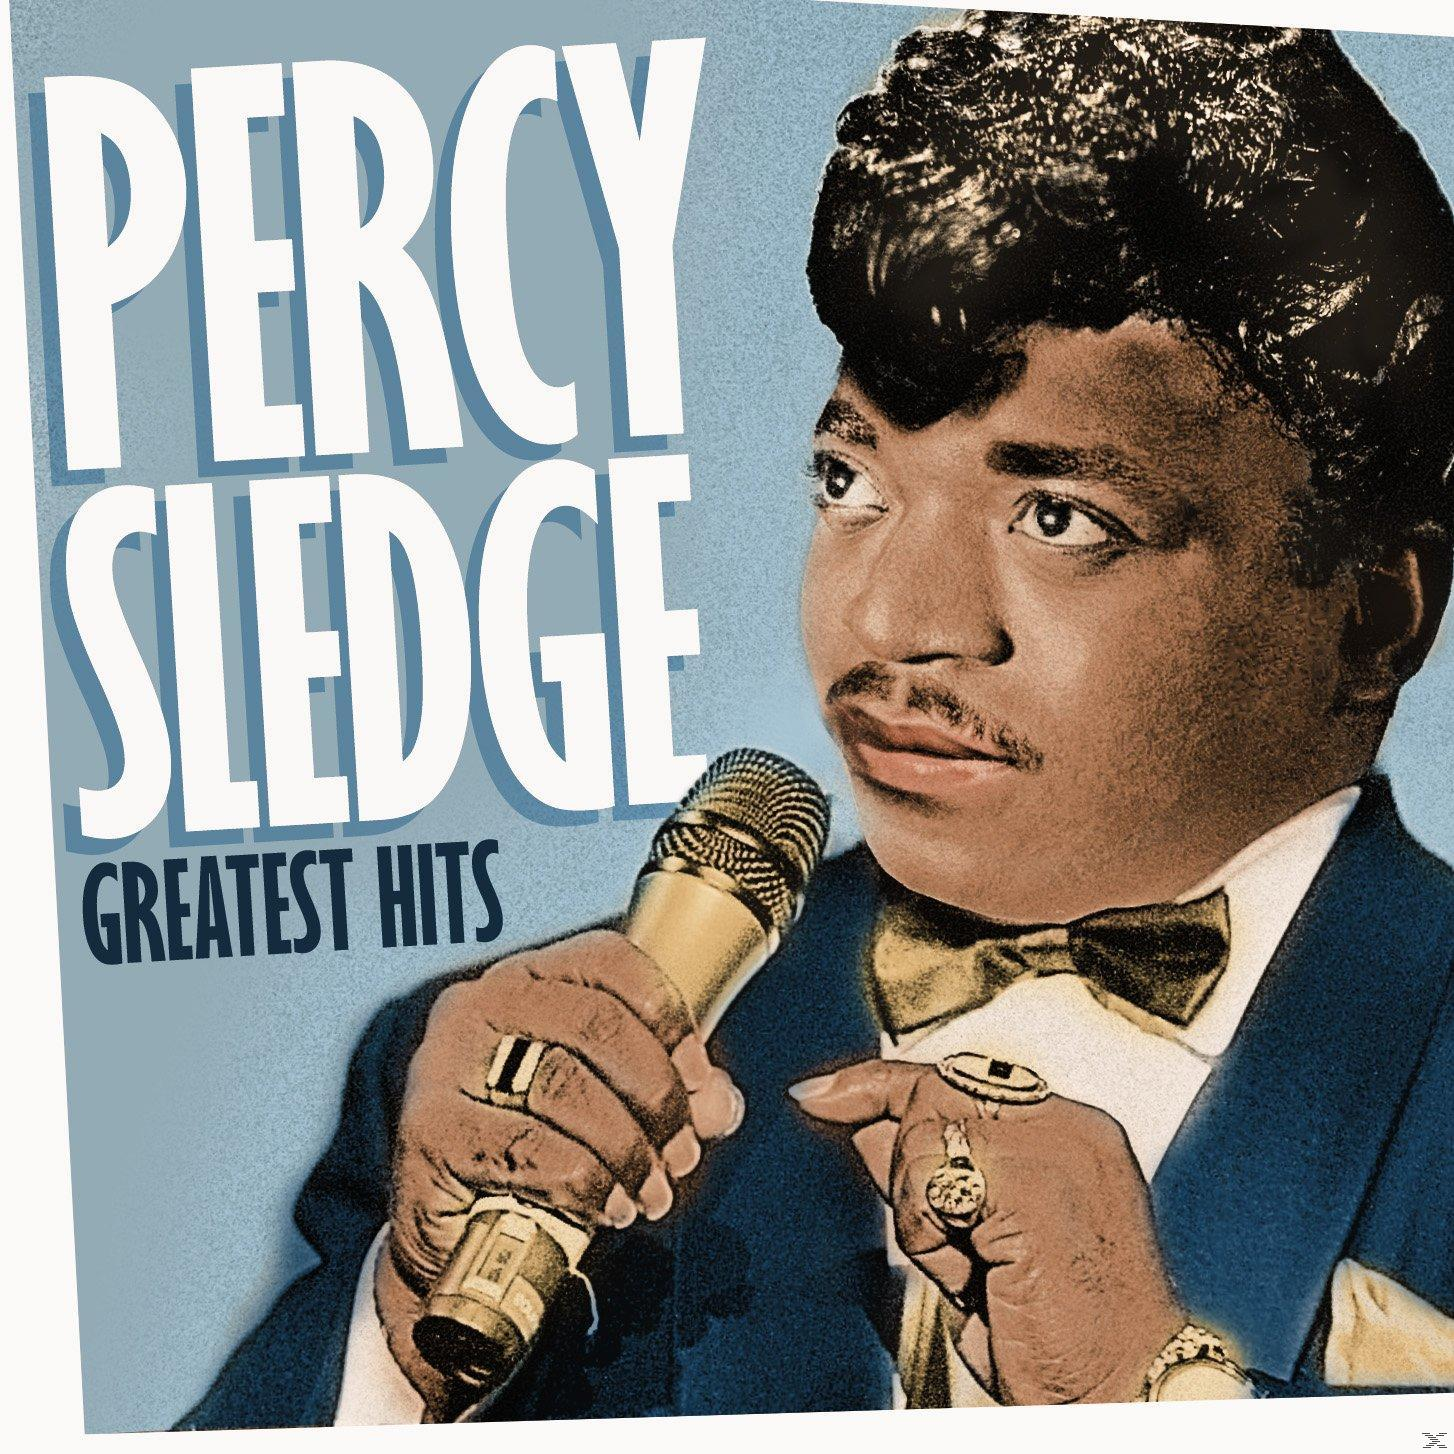 Sledge Greatest (CD) Hits - Percy -